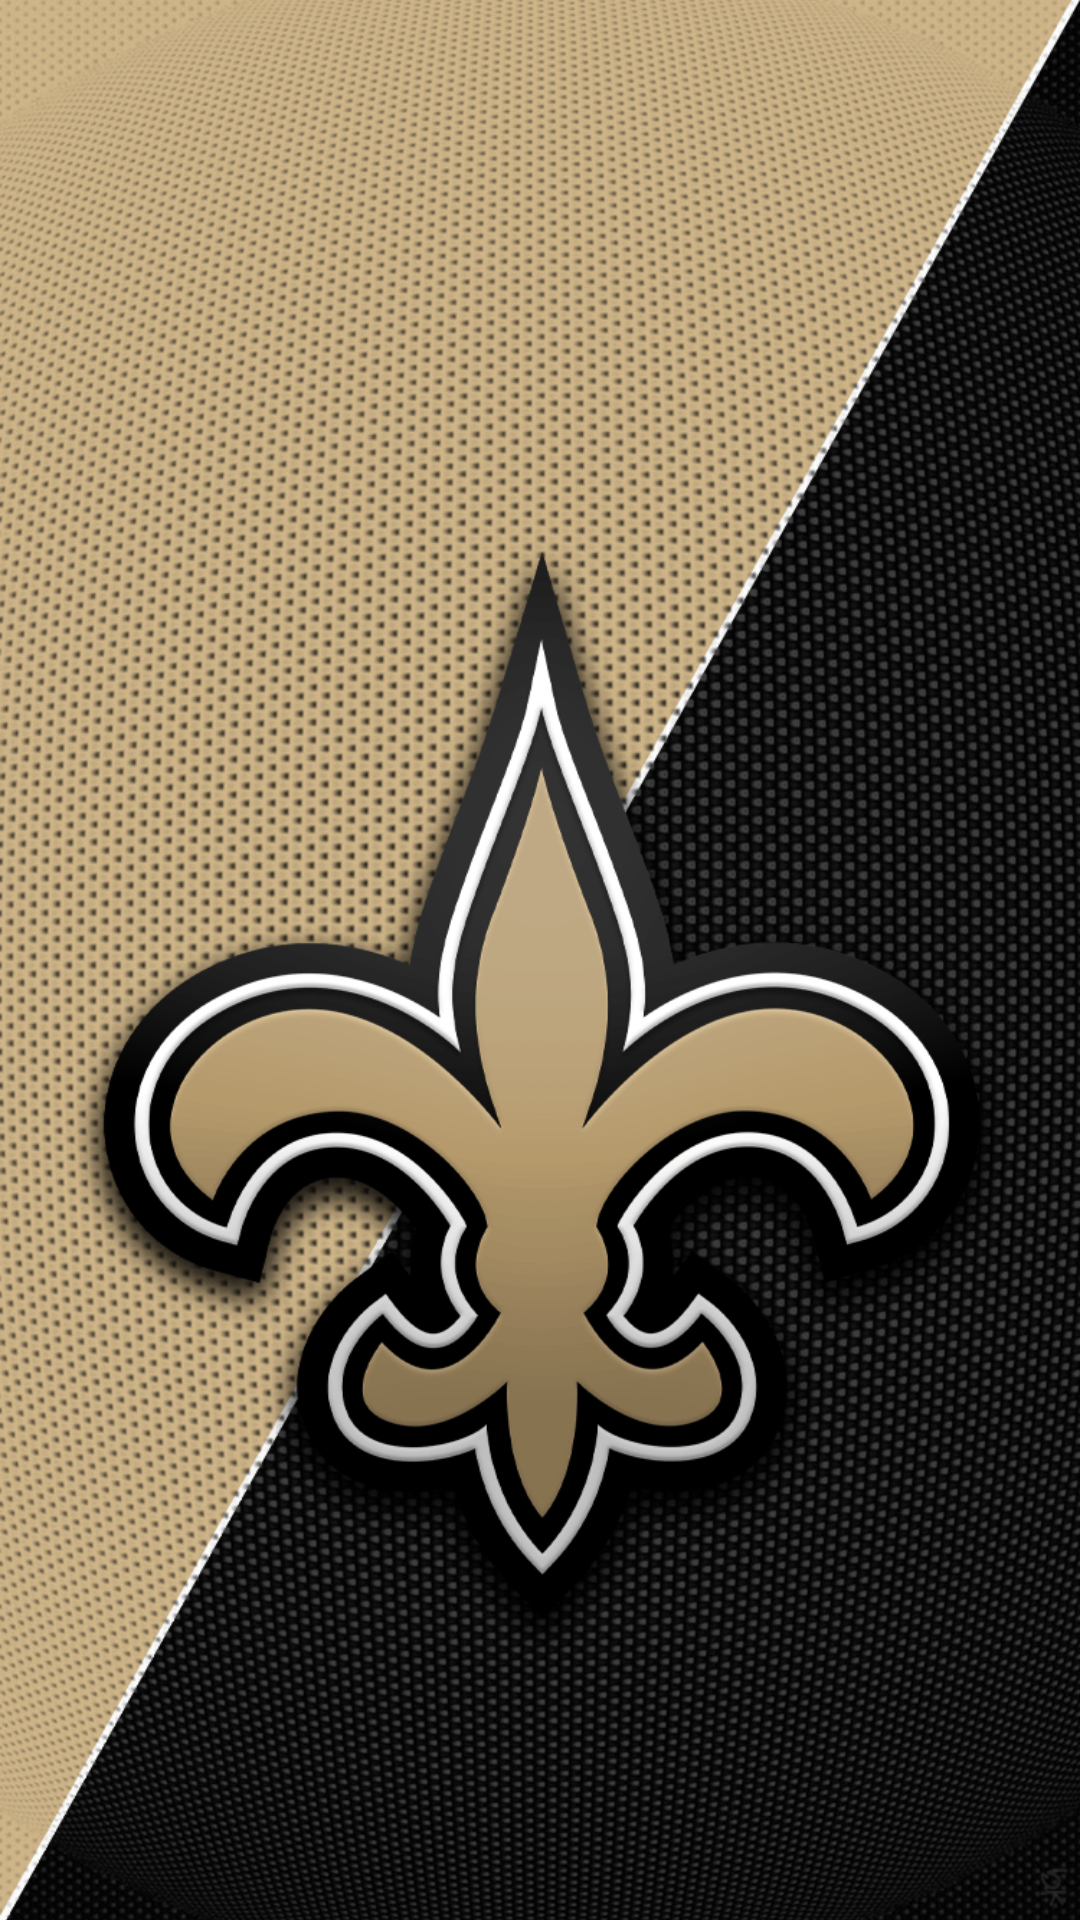 1080x1920 New Orleans Saints Wallpapers Top 25 Best New Orleans Saints Backgrounds Download